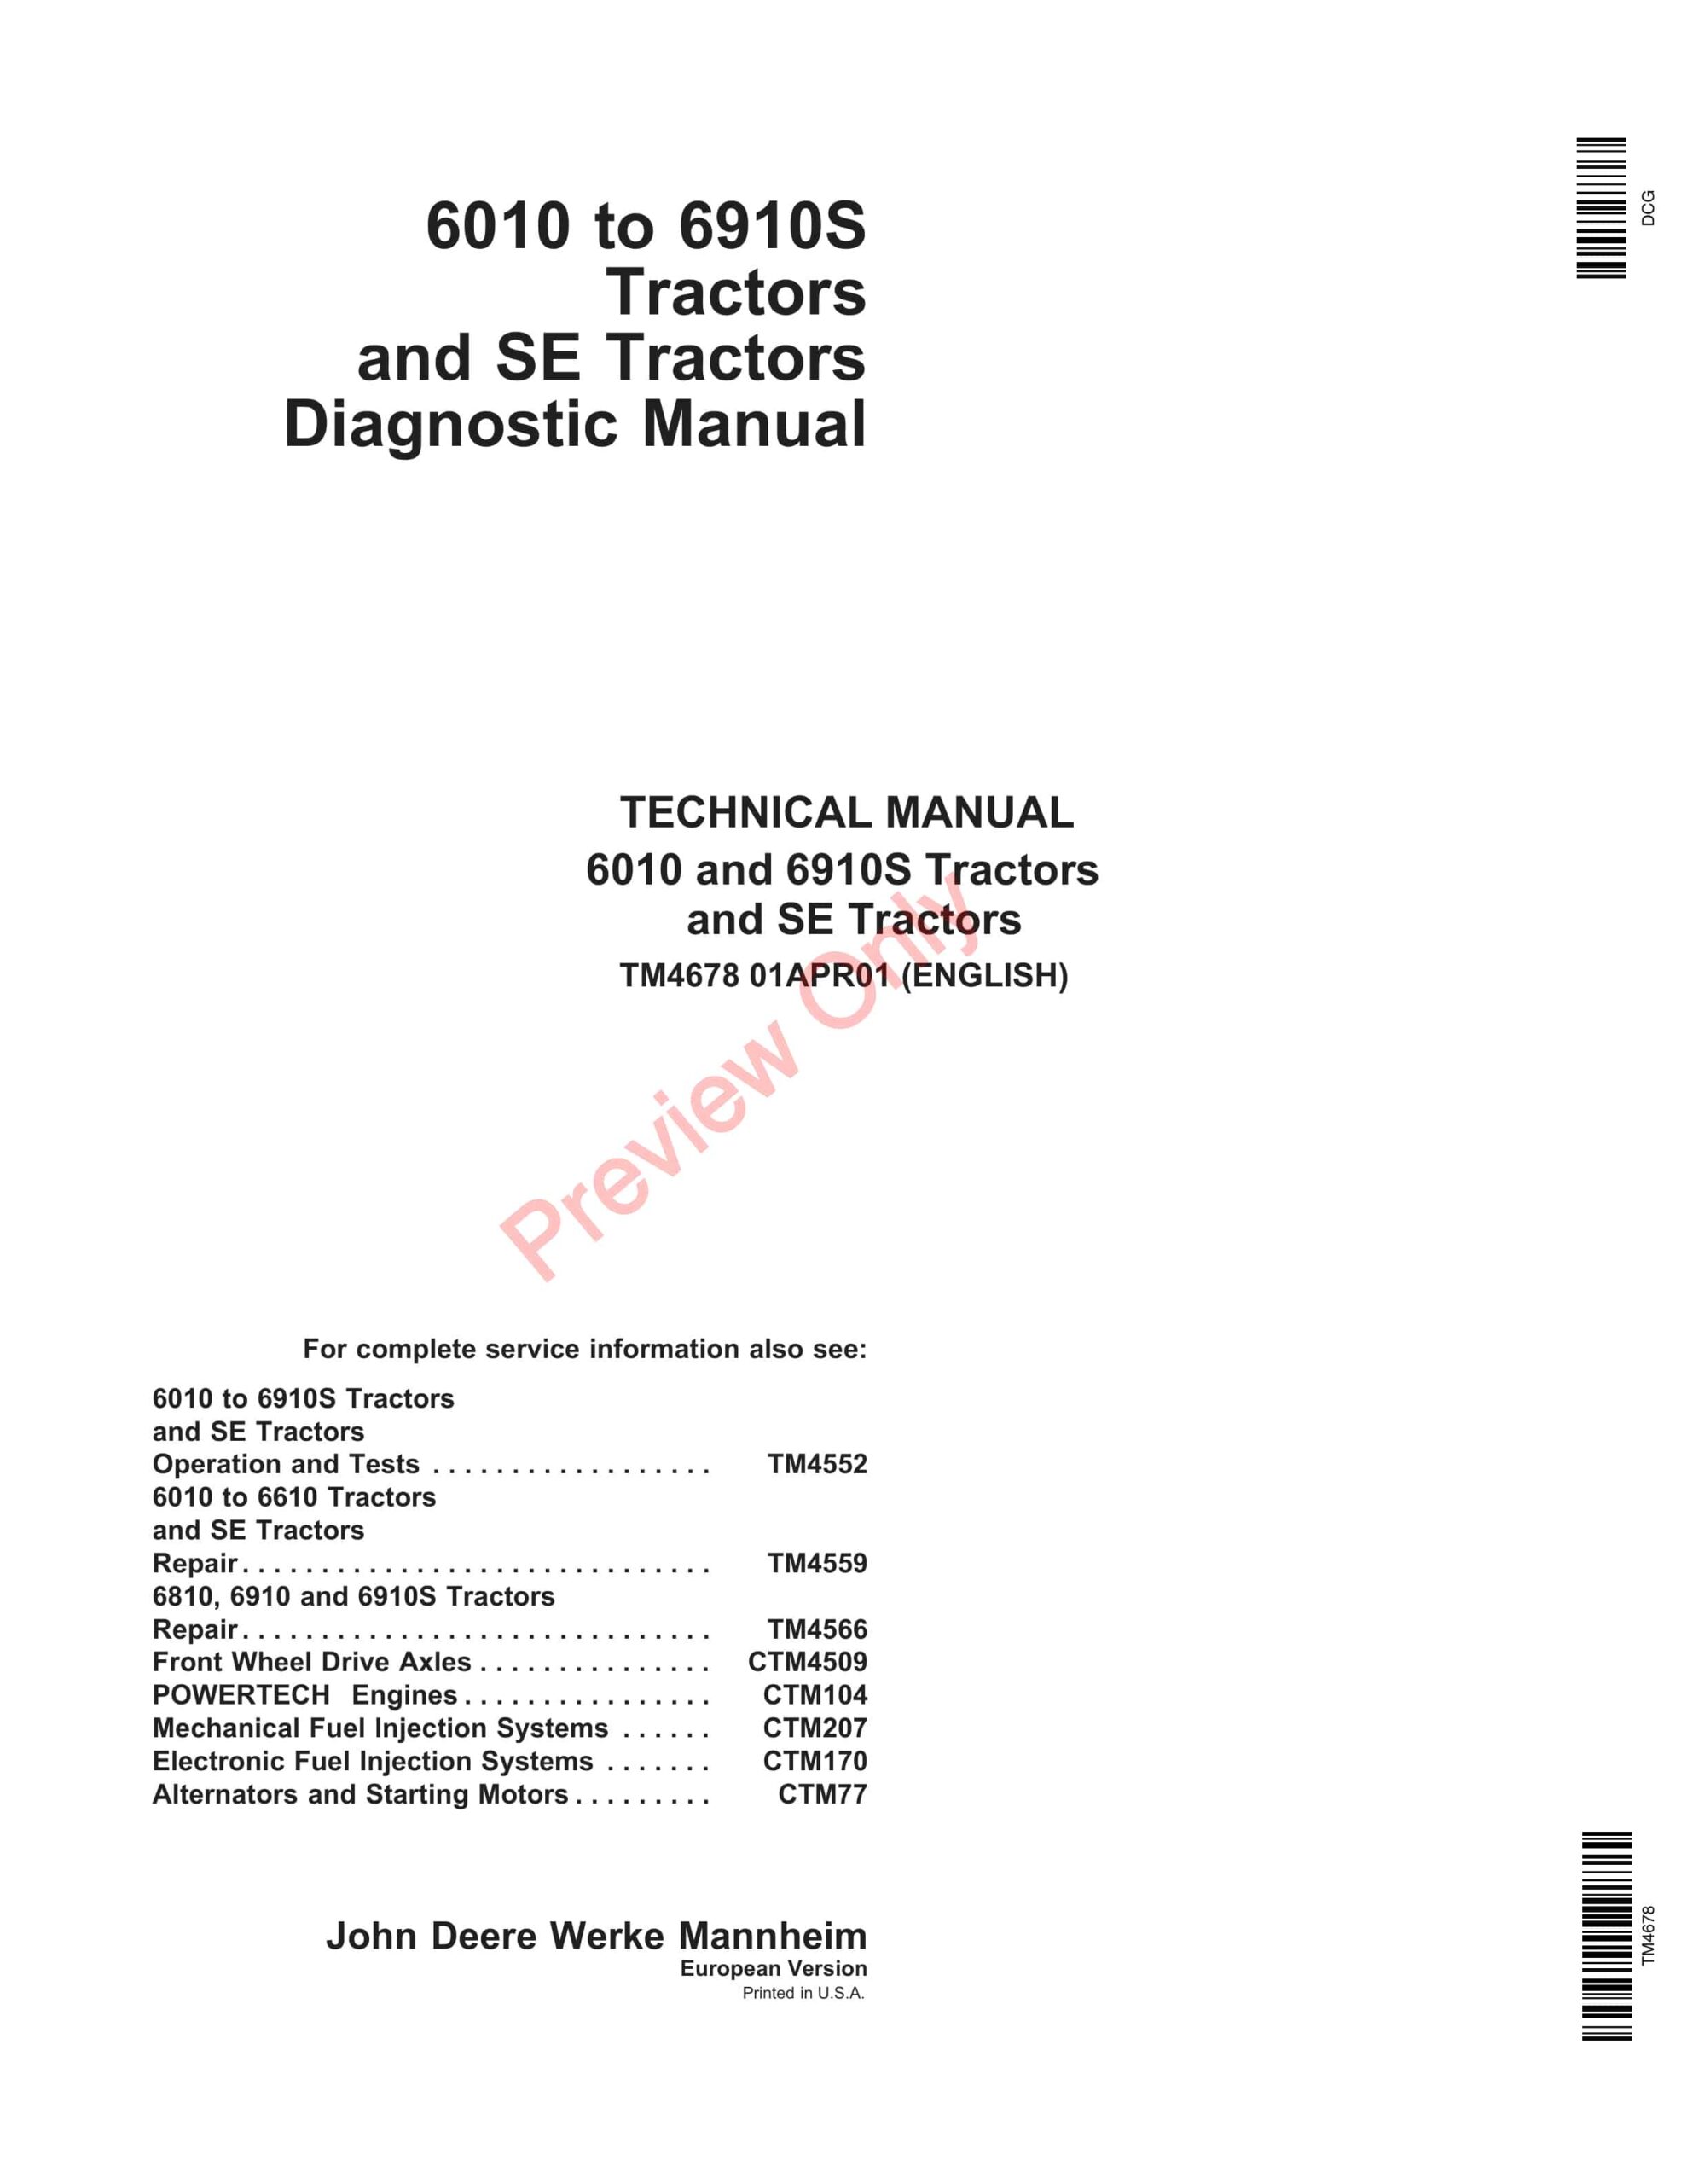 John Deere 6010 to 6910S Tractors and SE Tractors Service Information TM4678 01APR01-1